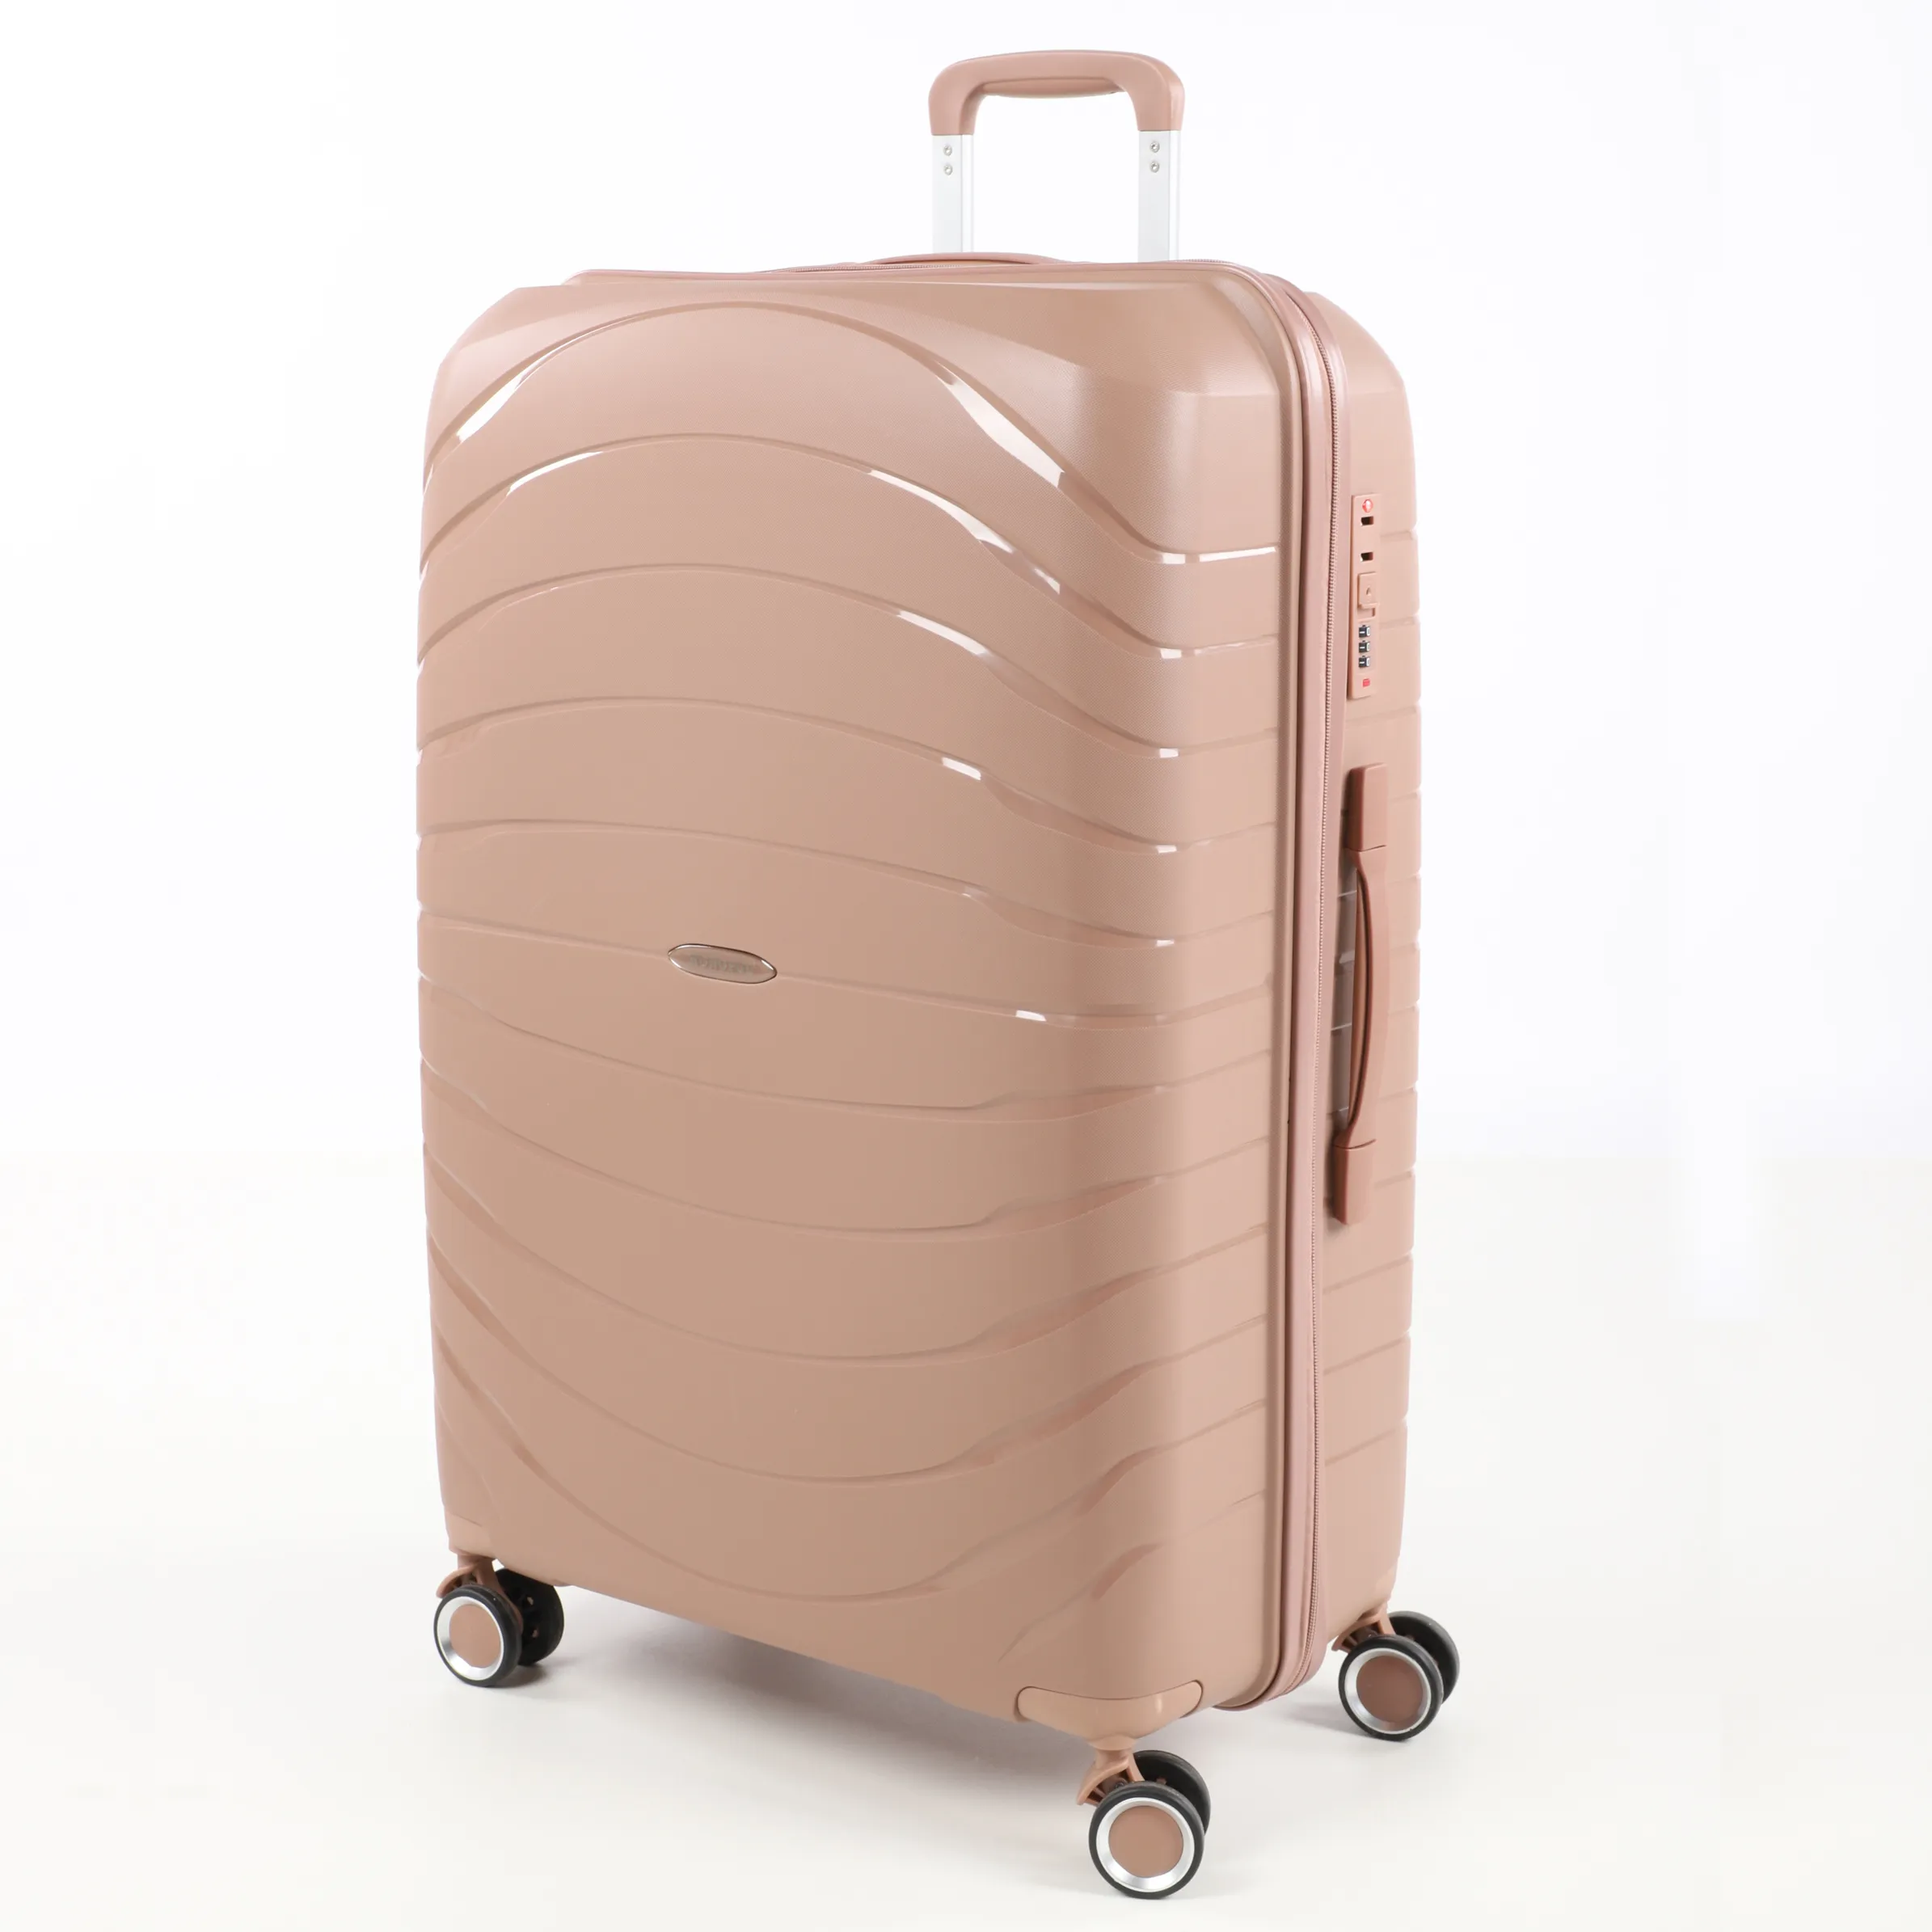 Koffer/Taschen Koffer Denver 76x51x30 Rosa 894515 ROSA 1